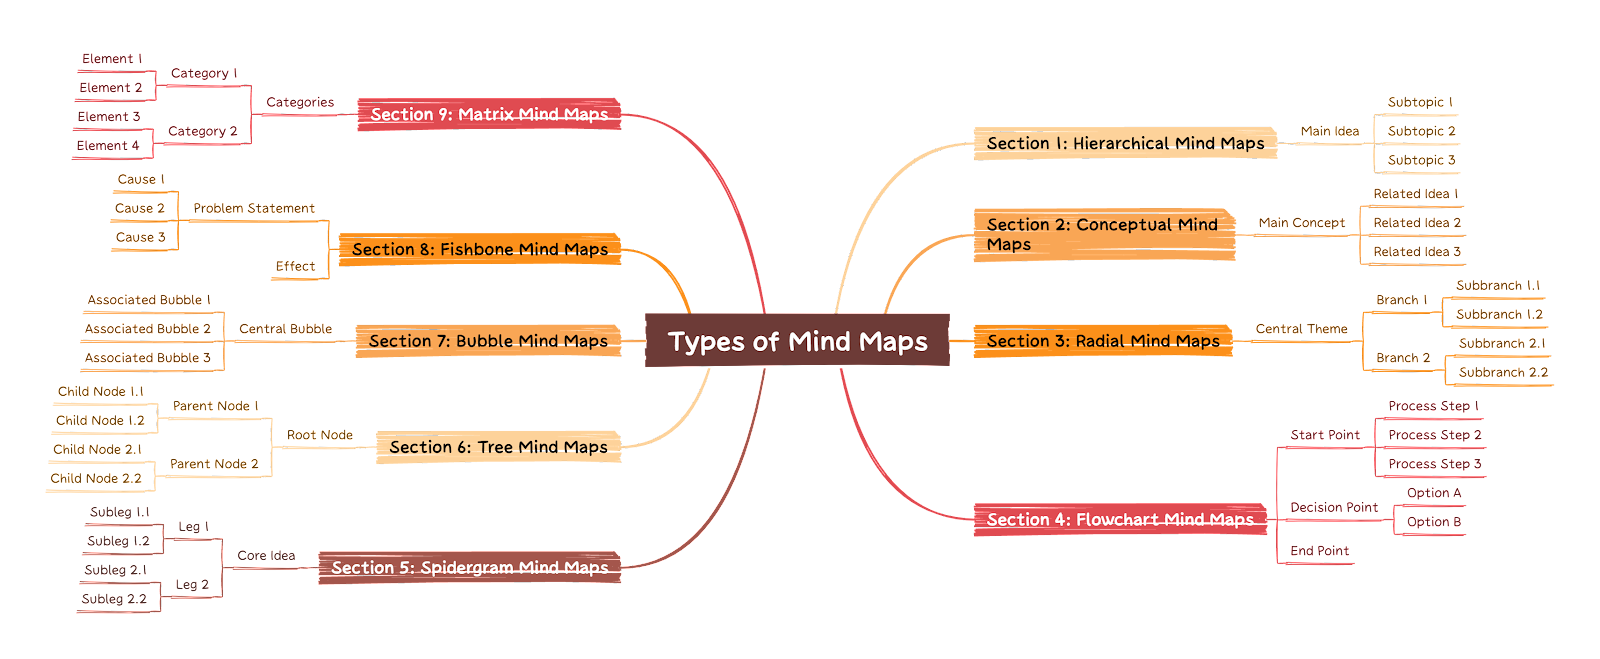 An example of a mindmap